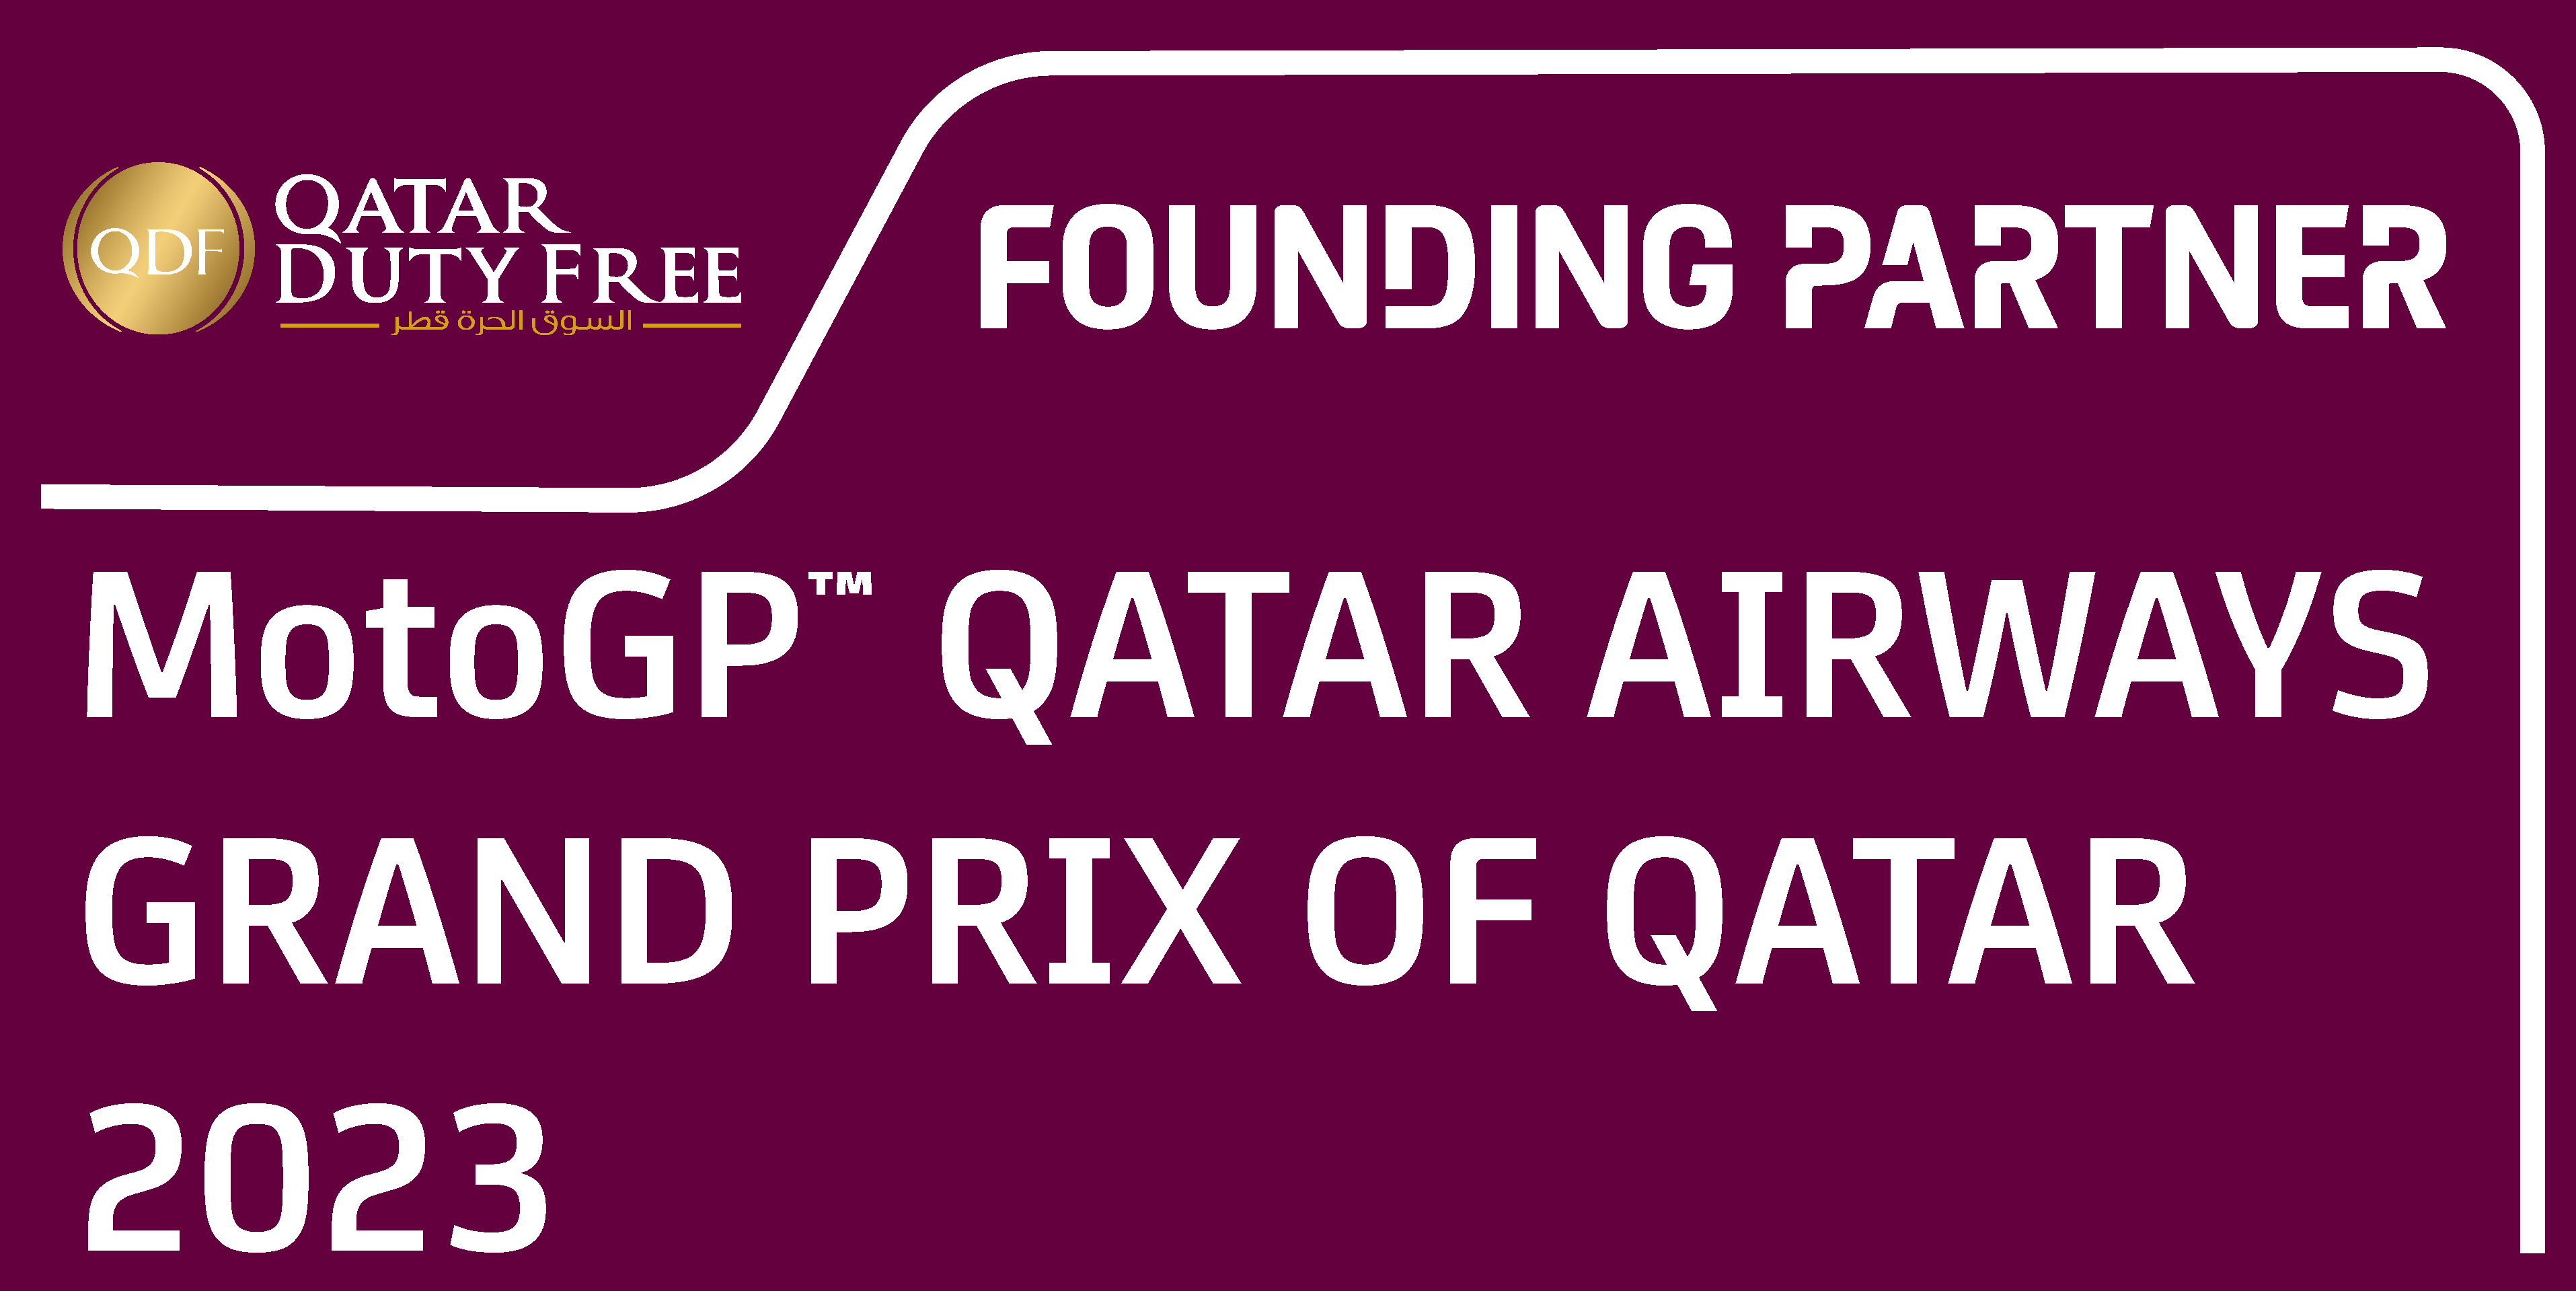 Qatar Duty Free at the fore of MotoGP Qatar Airways Grand Prix 2023